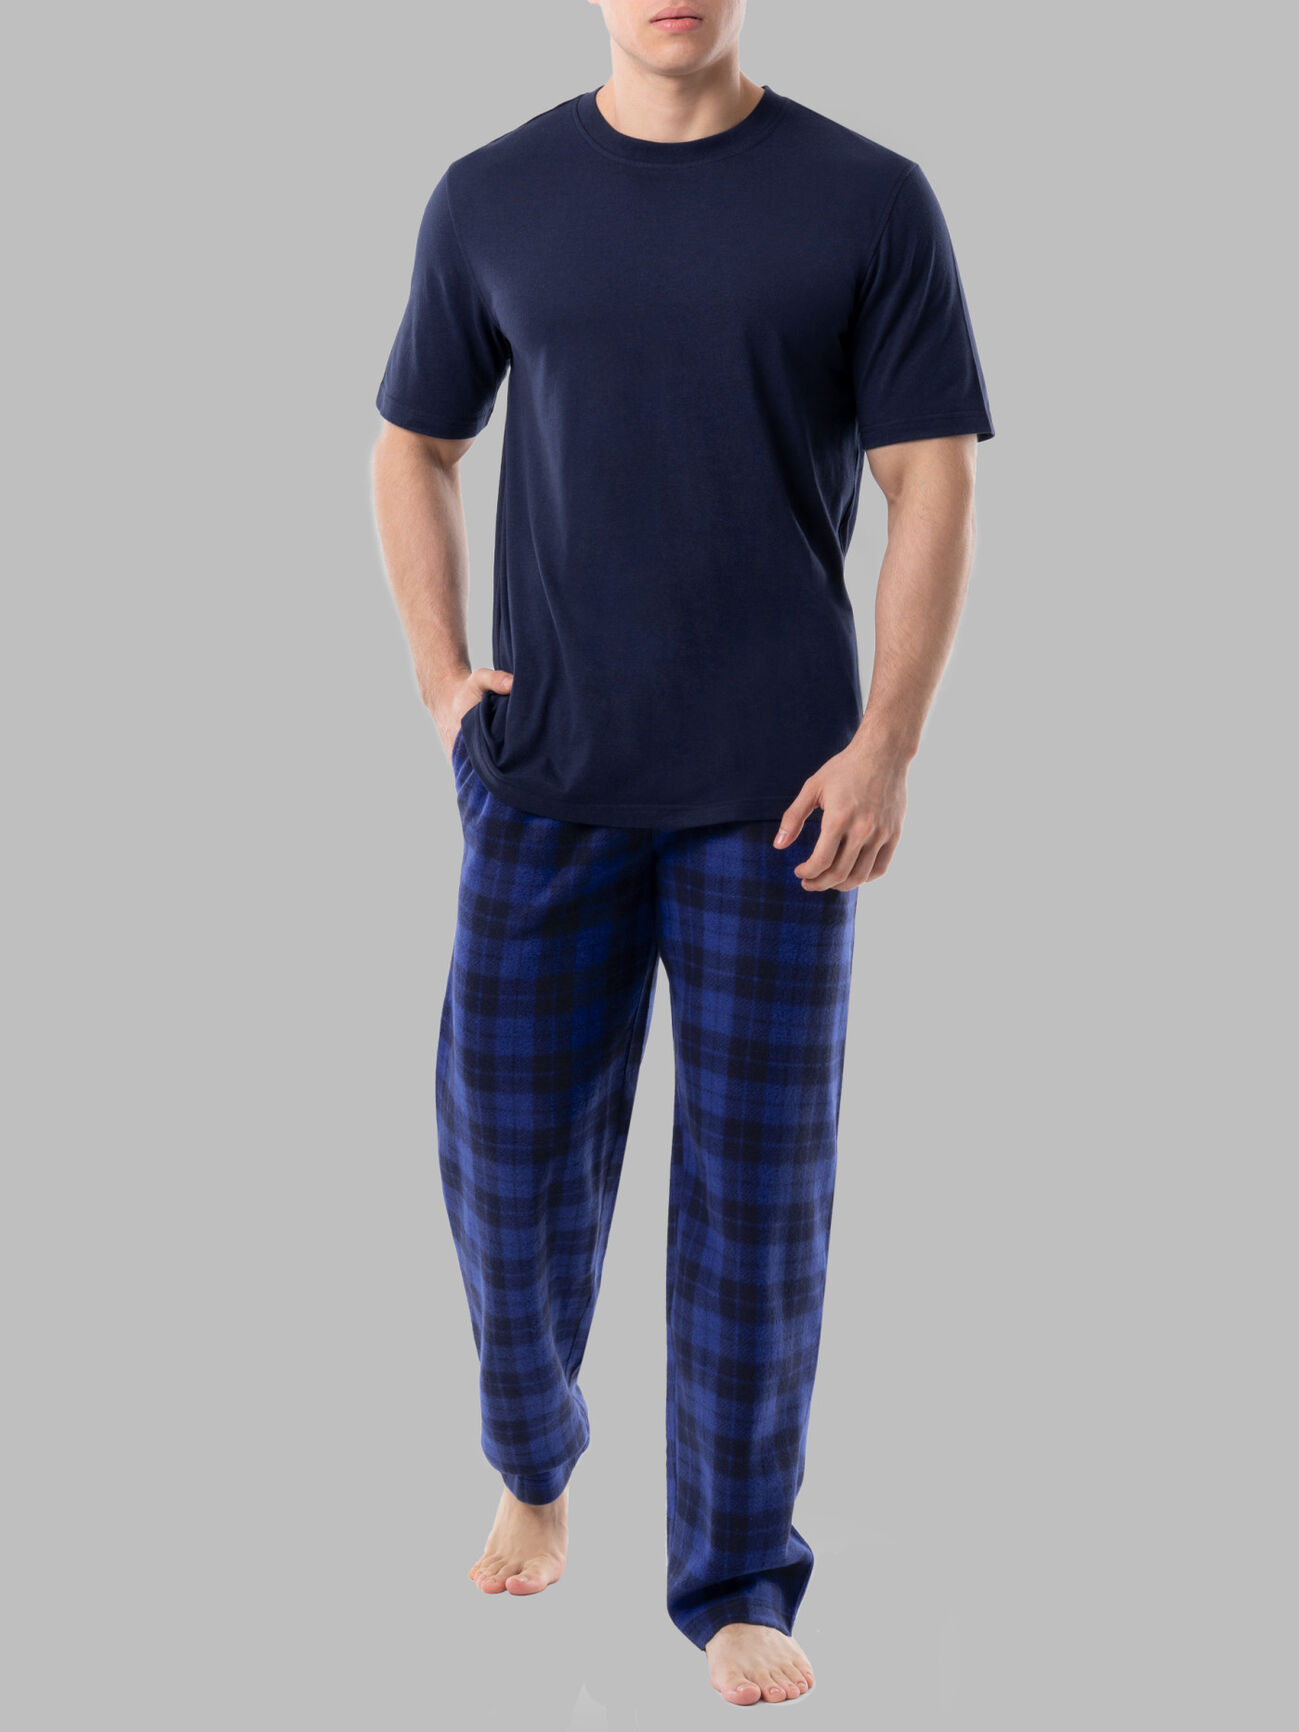 Modal Pajama Set - Shop on Pinterest